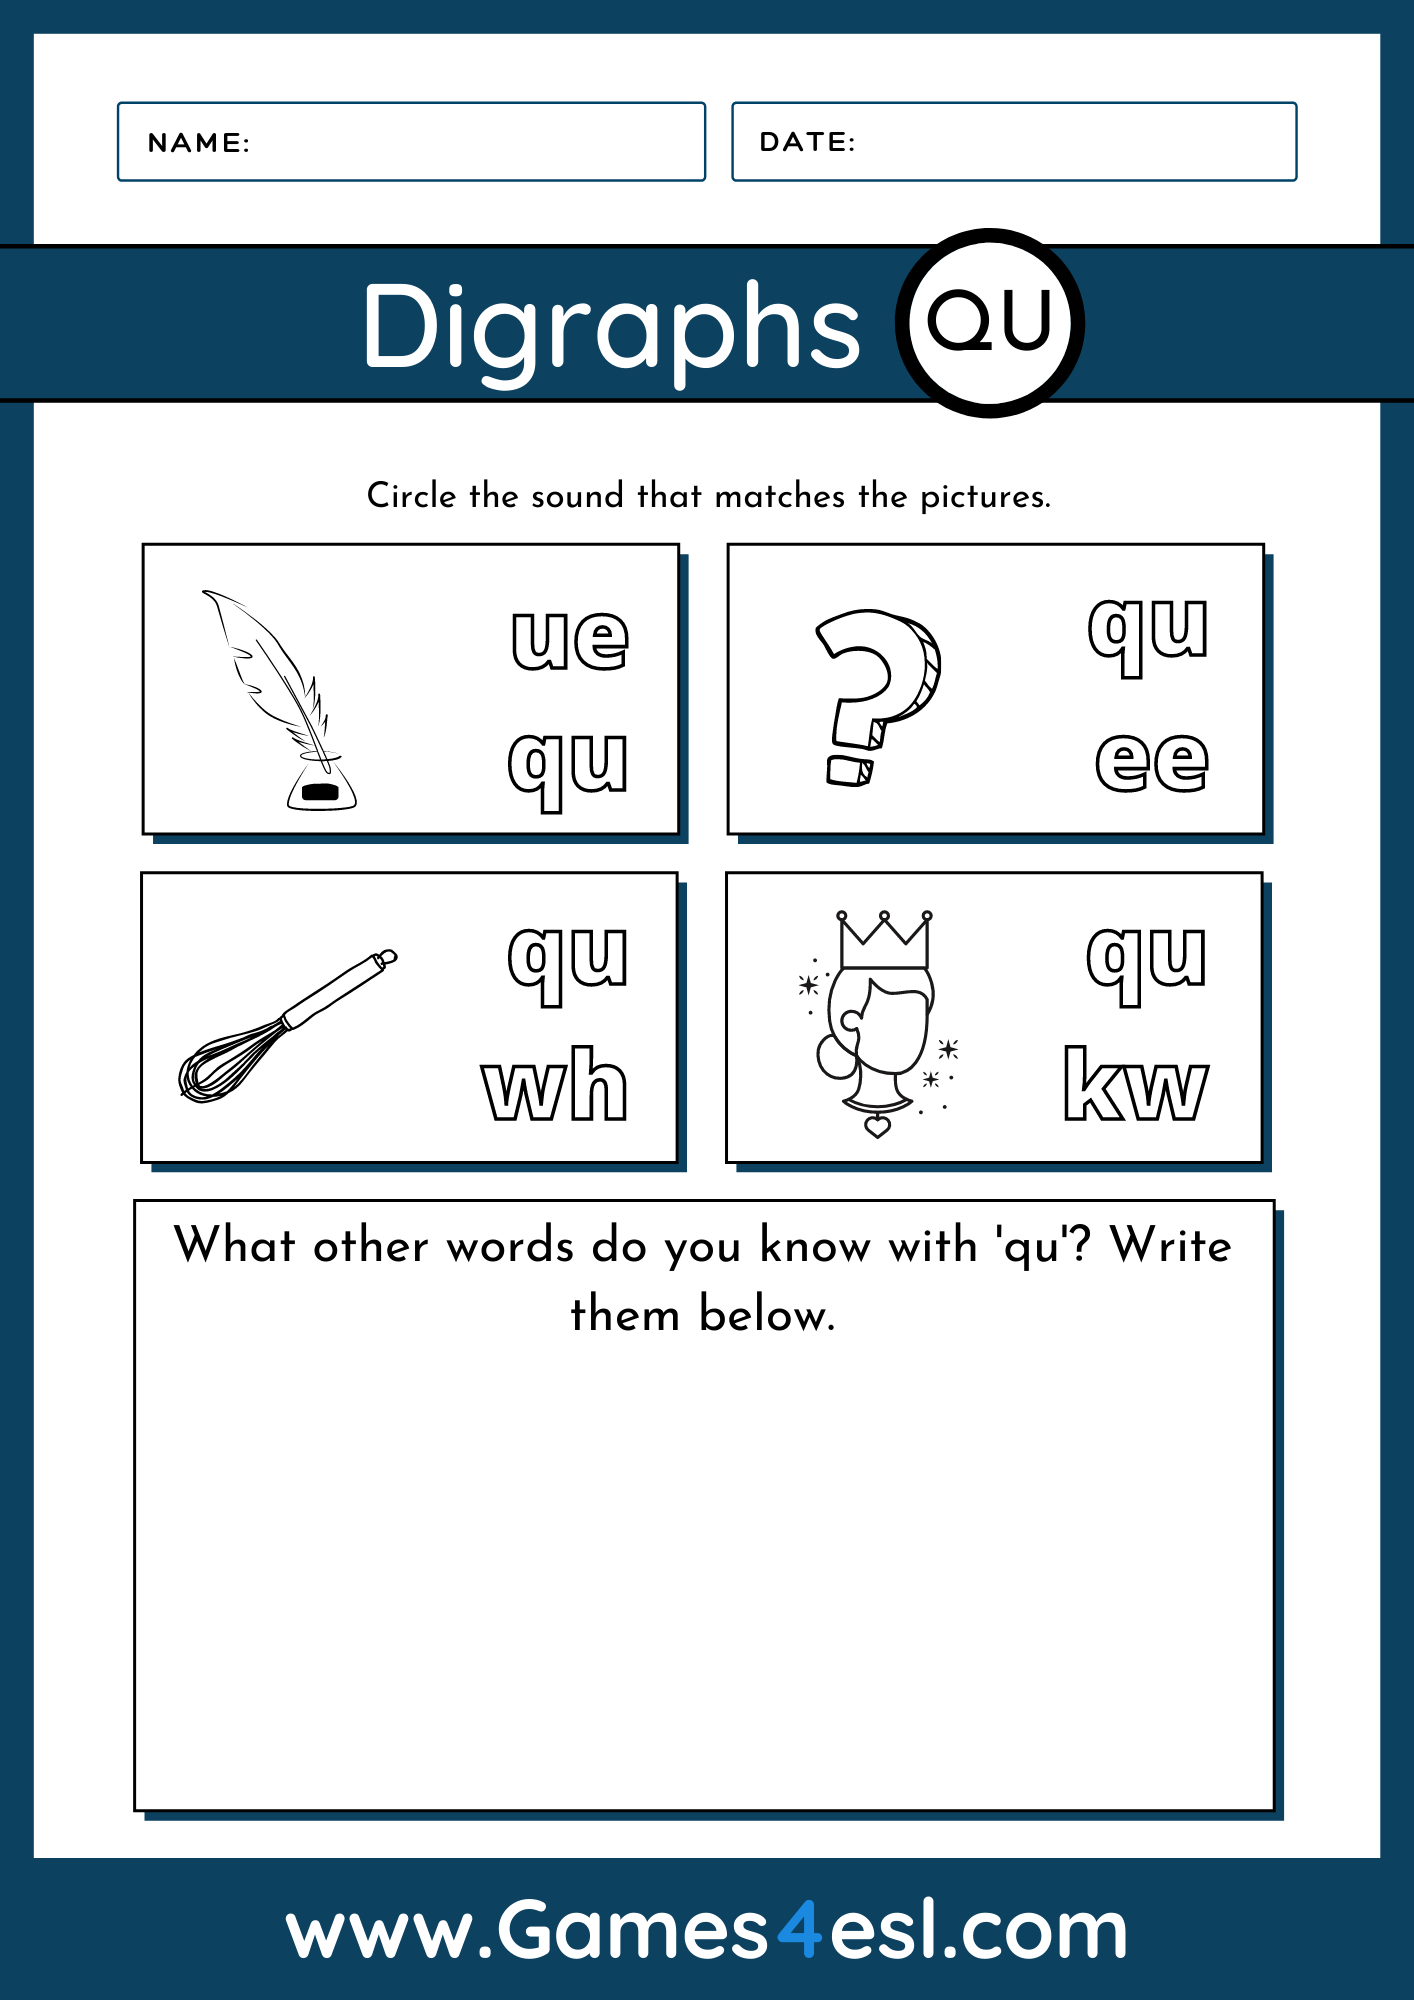 QU Digraph Worksheet